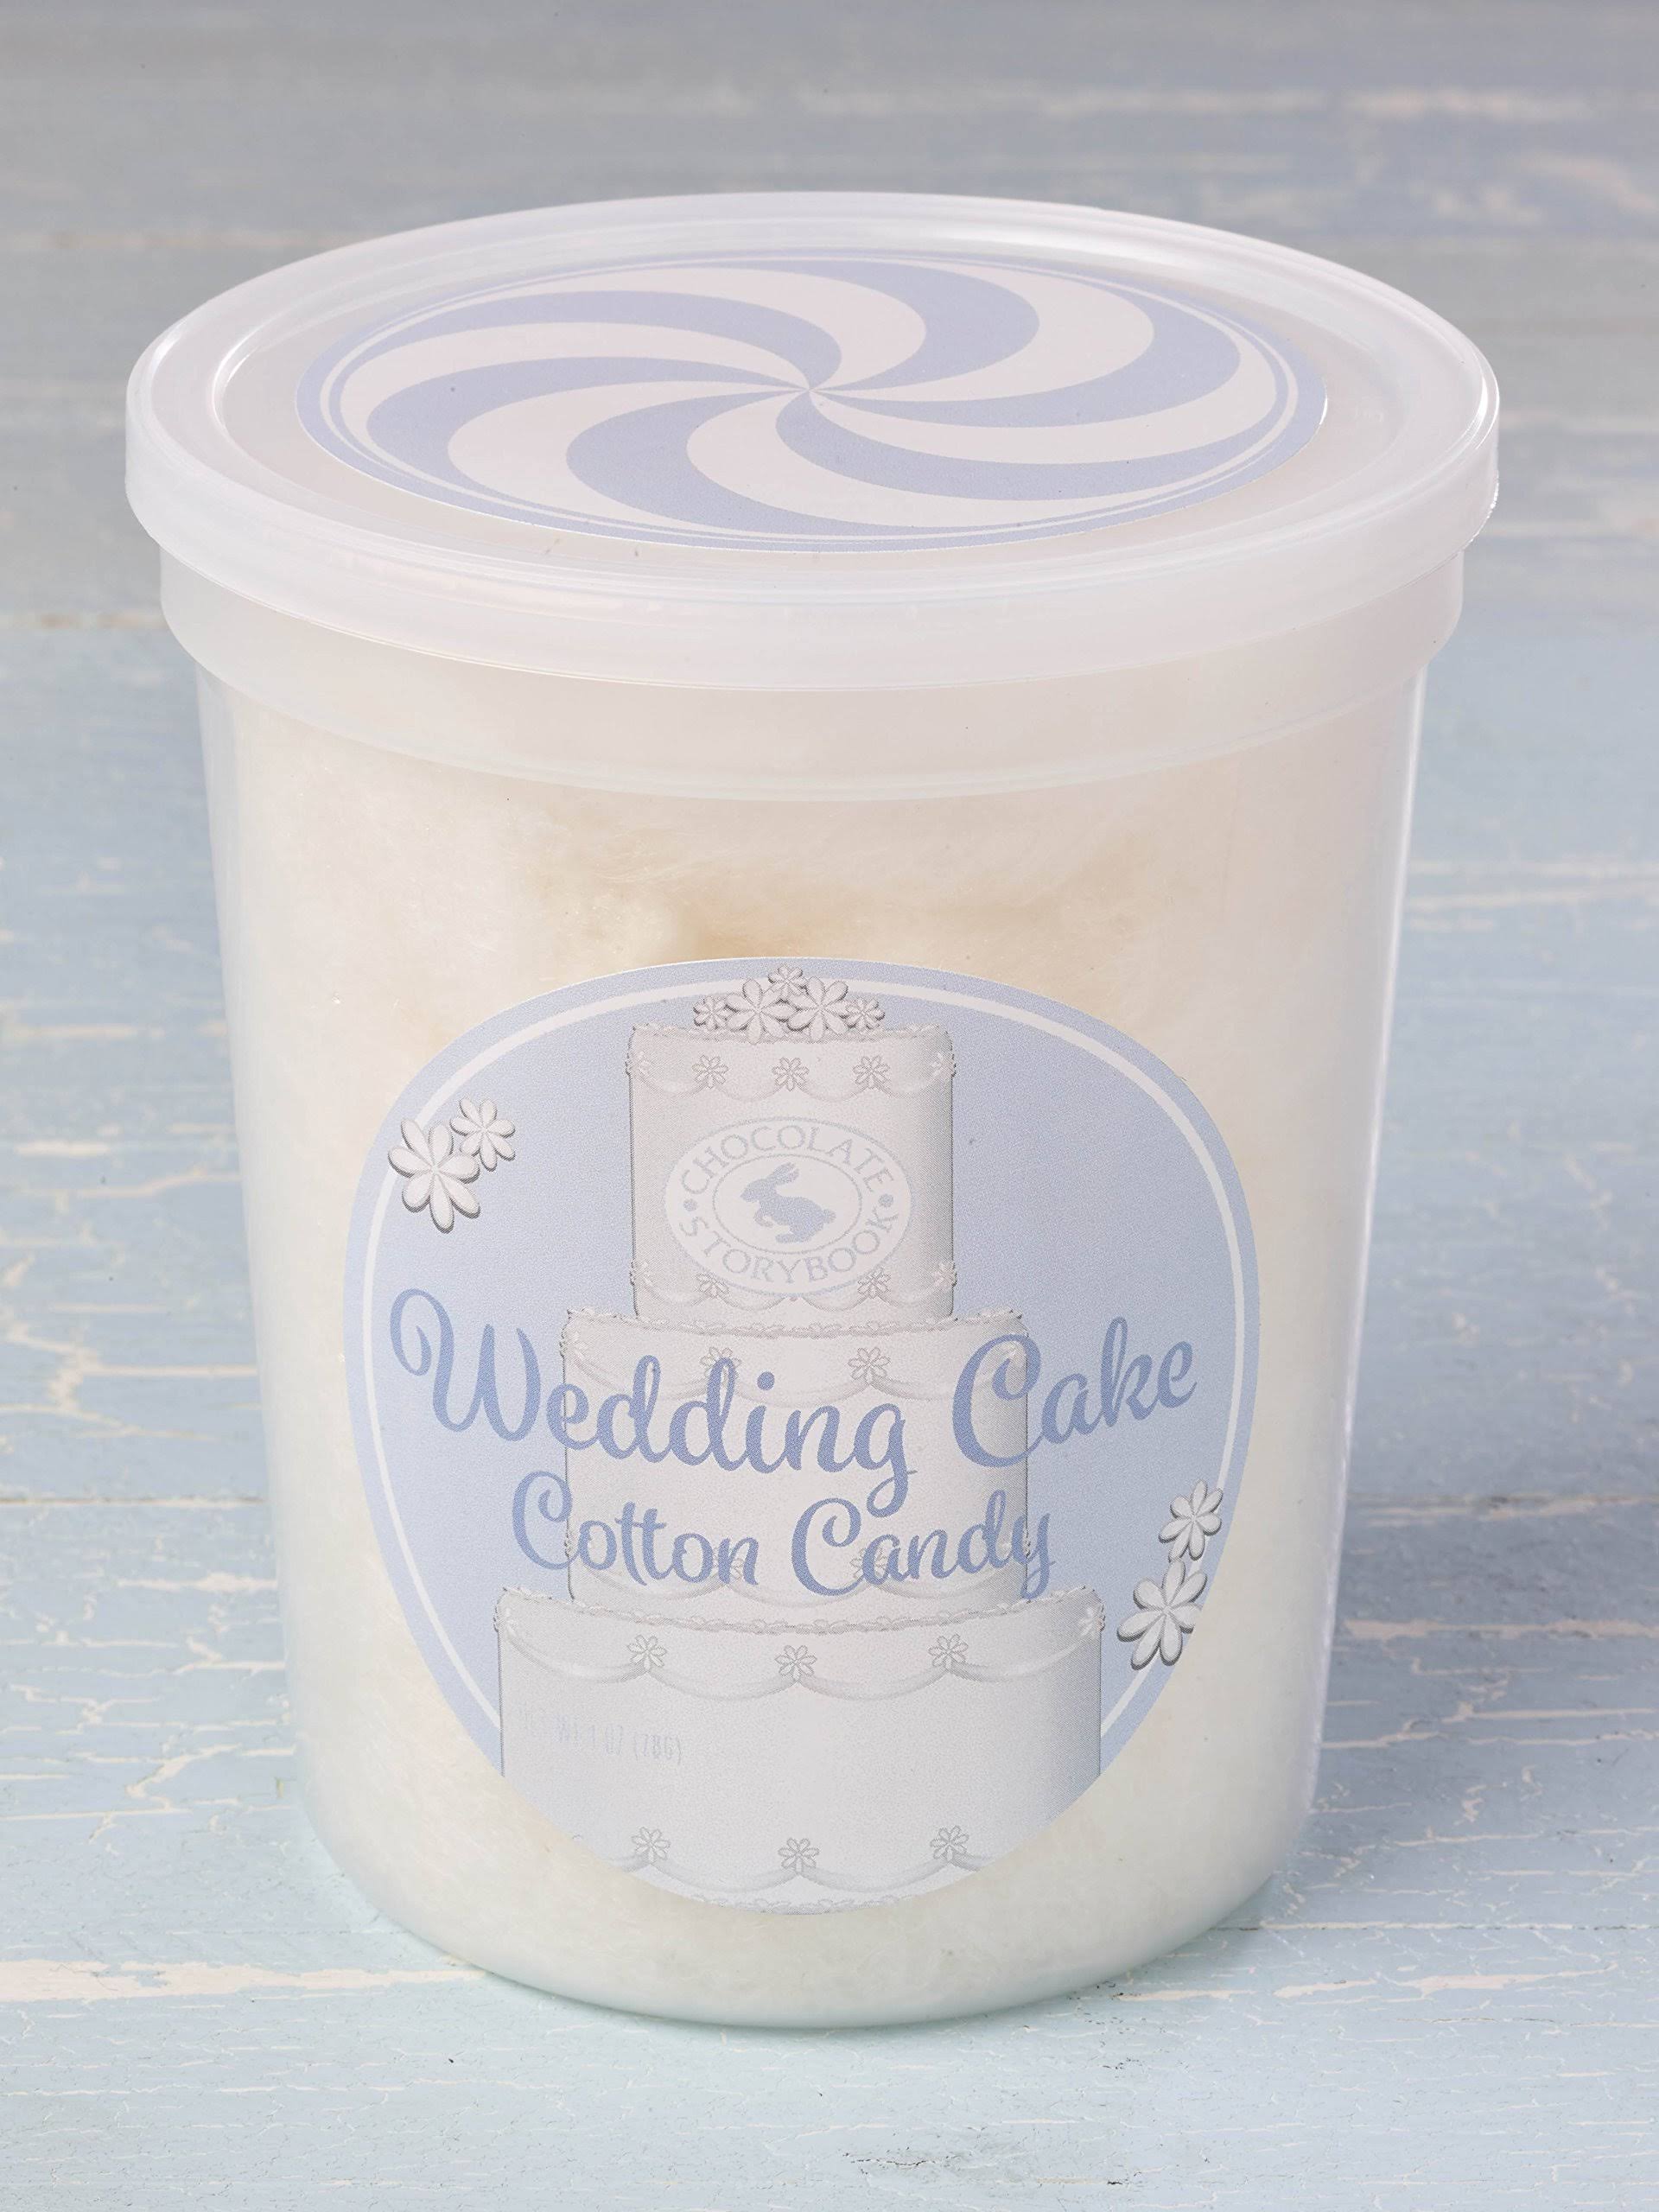 Gourmet Cotton Candy - Wedding Cake